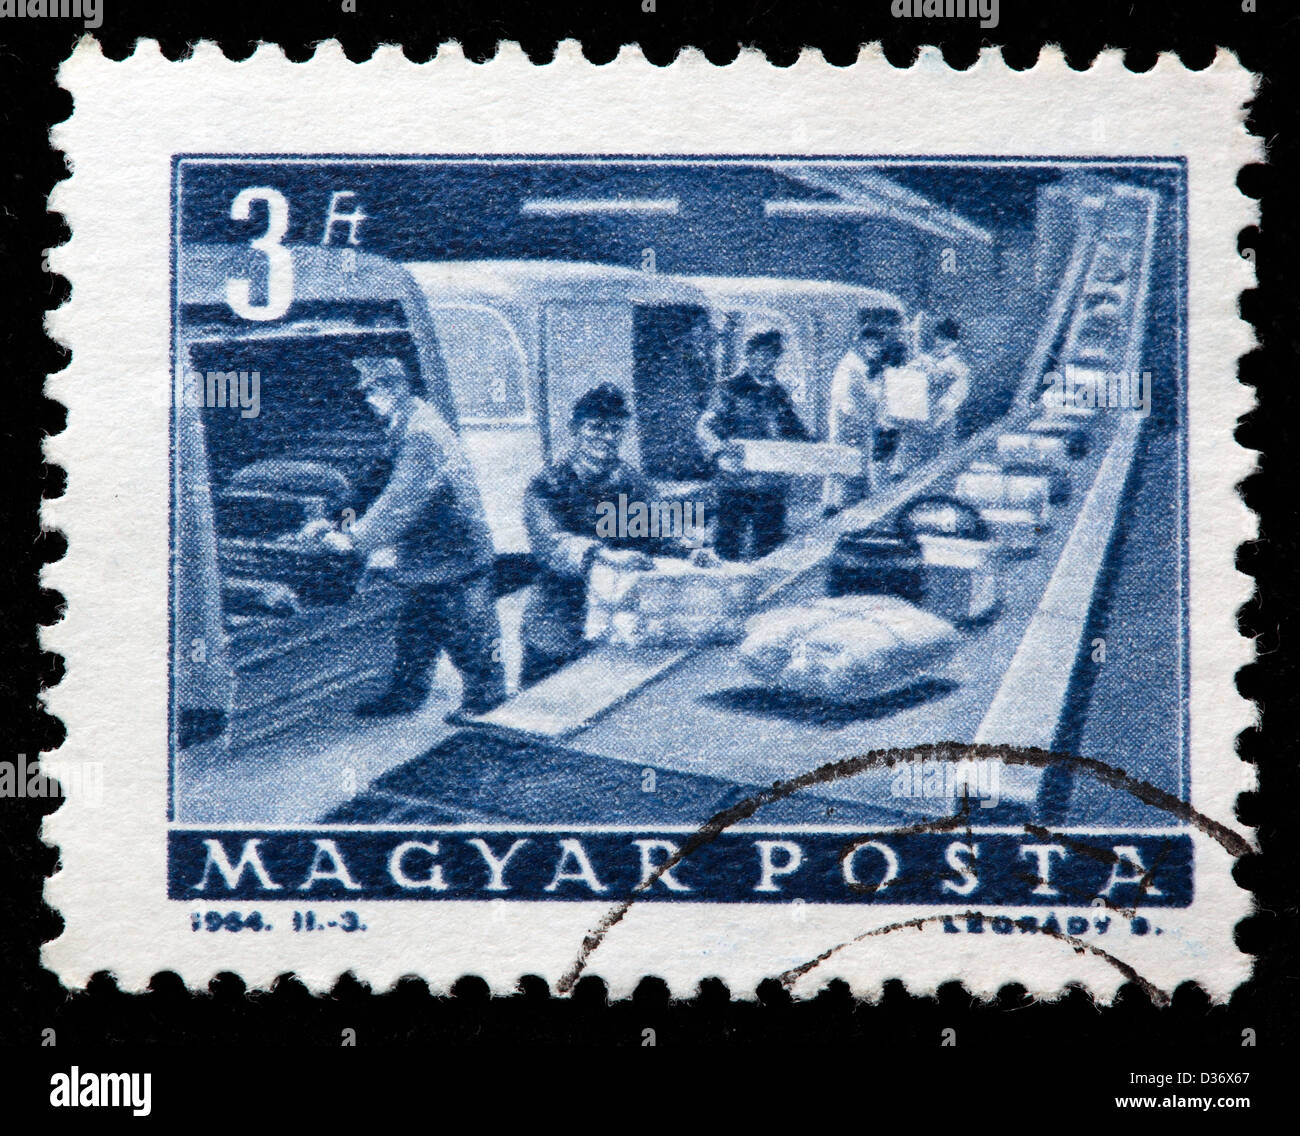 Parcel conveyor, postage stamp, Hungary, 1964 Stock Photo